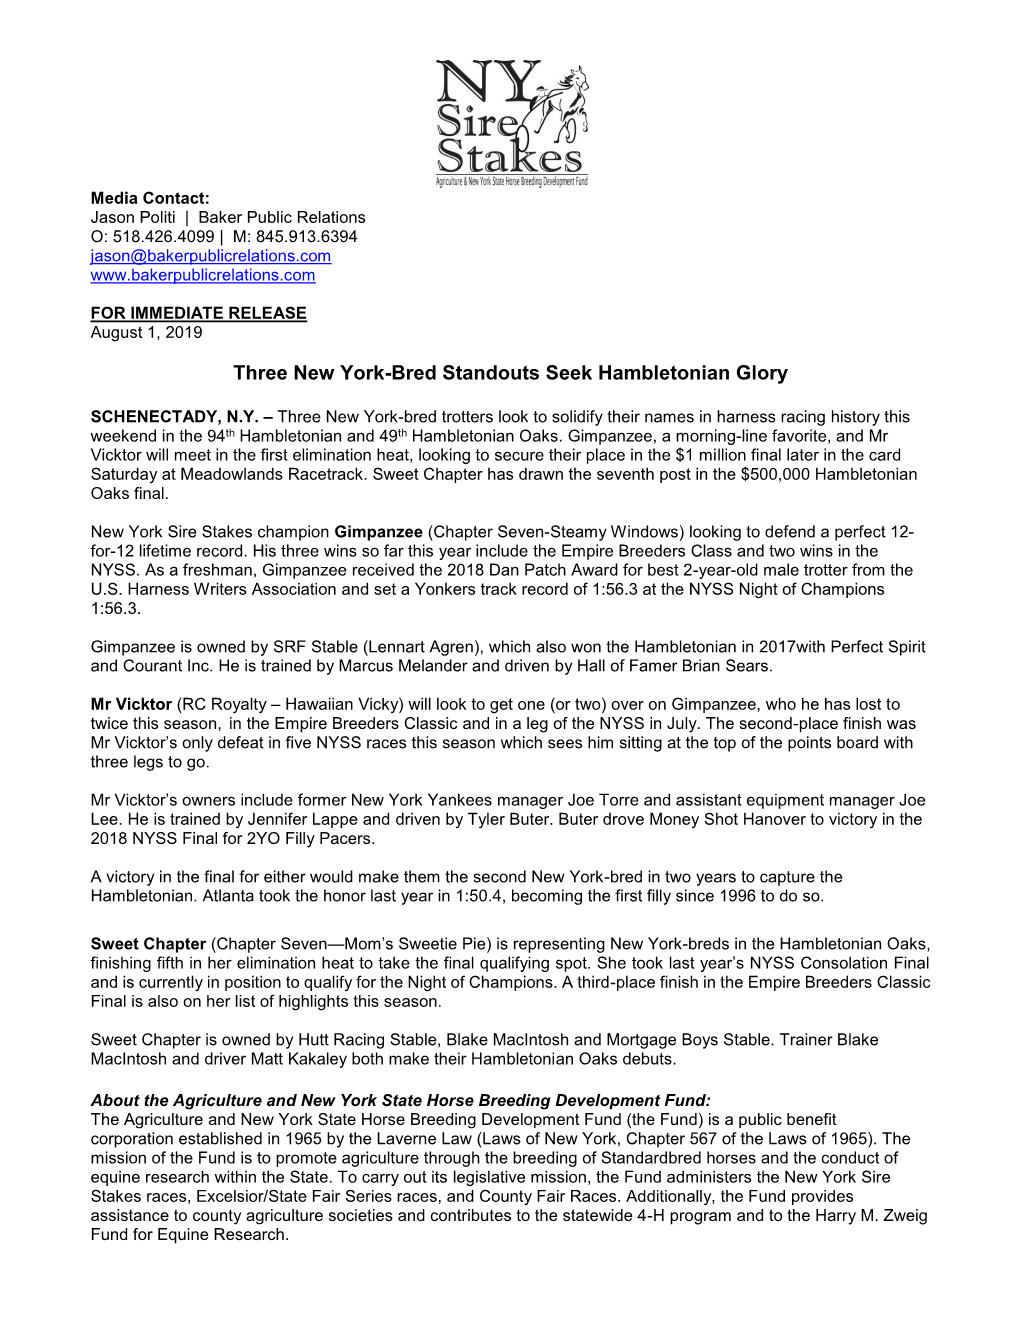 Three New York-Bred Standouts Seek Hambletonian Glory